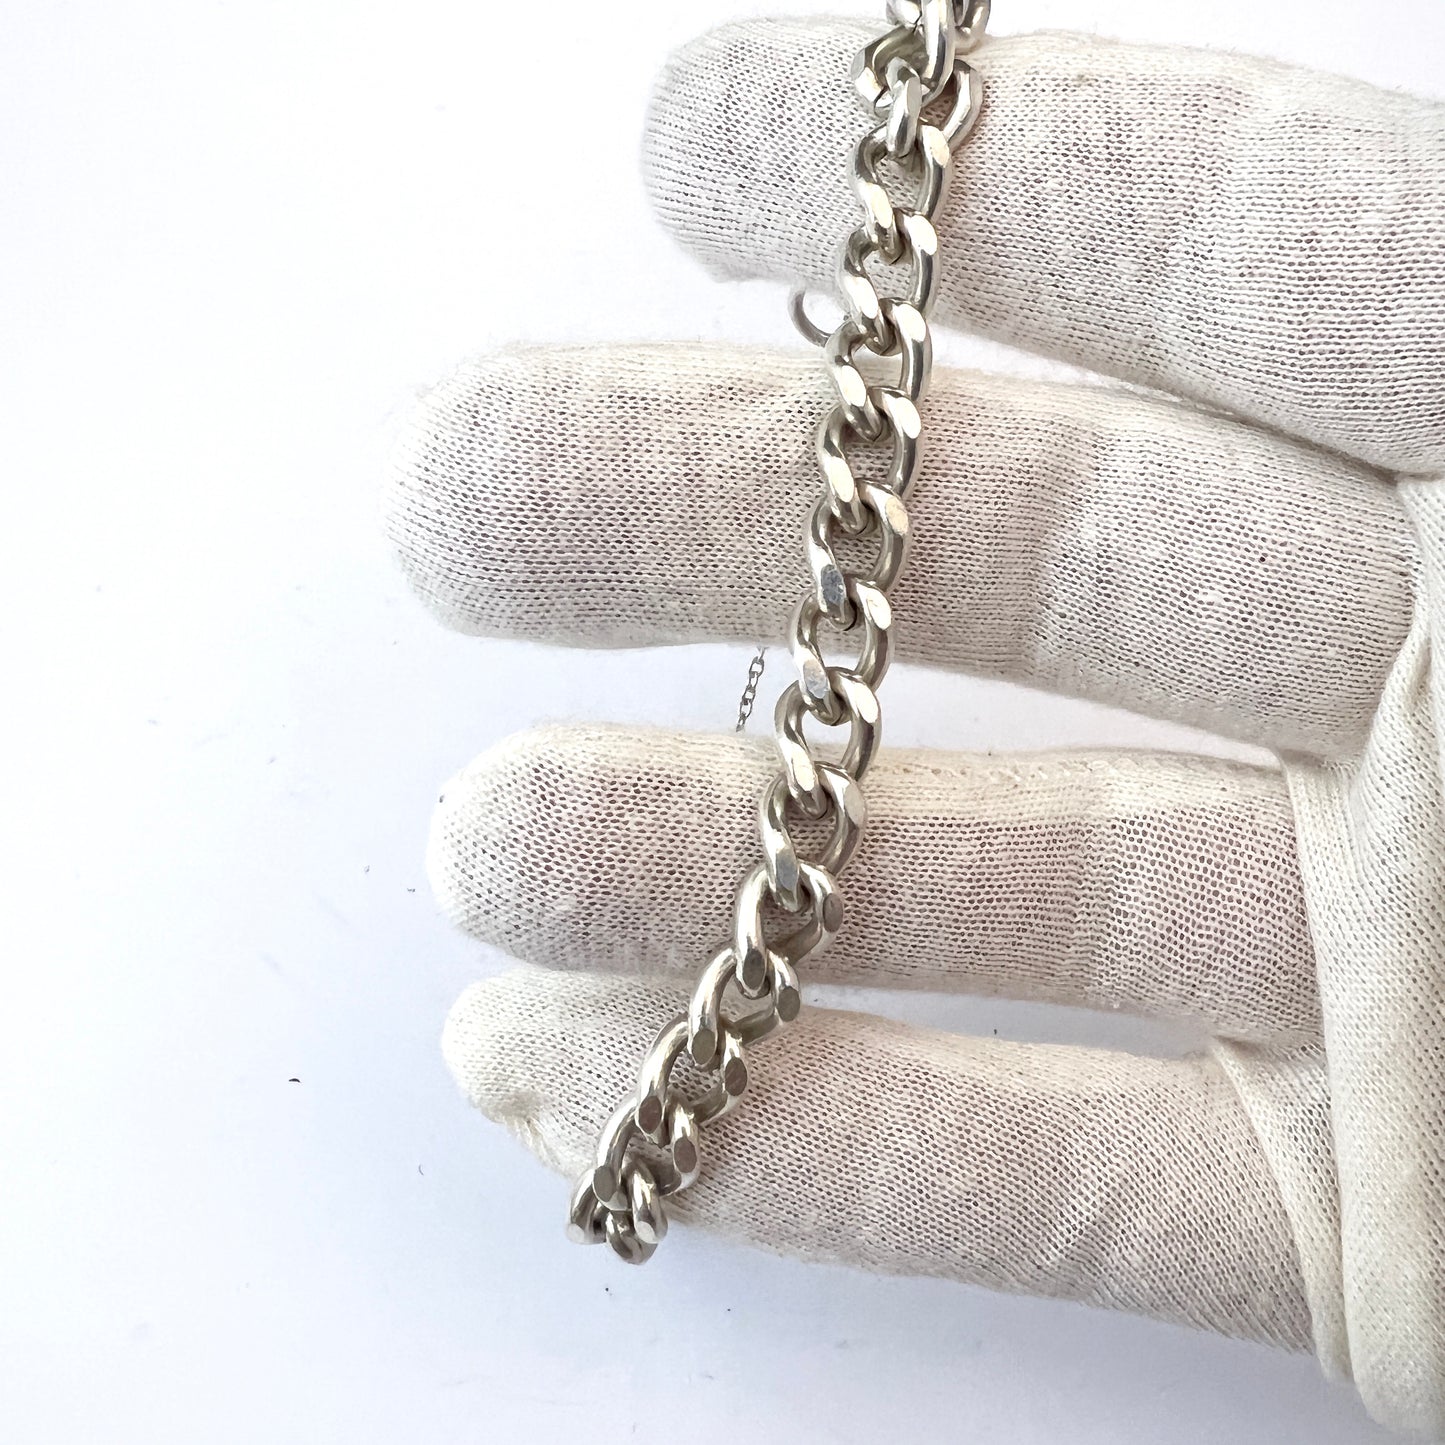 London 1977-78 Sterling Silver Heart Clasp Charm Bracelet.